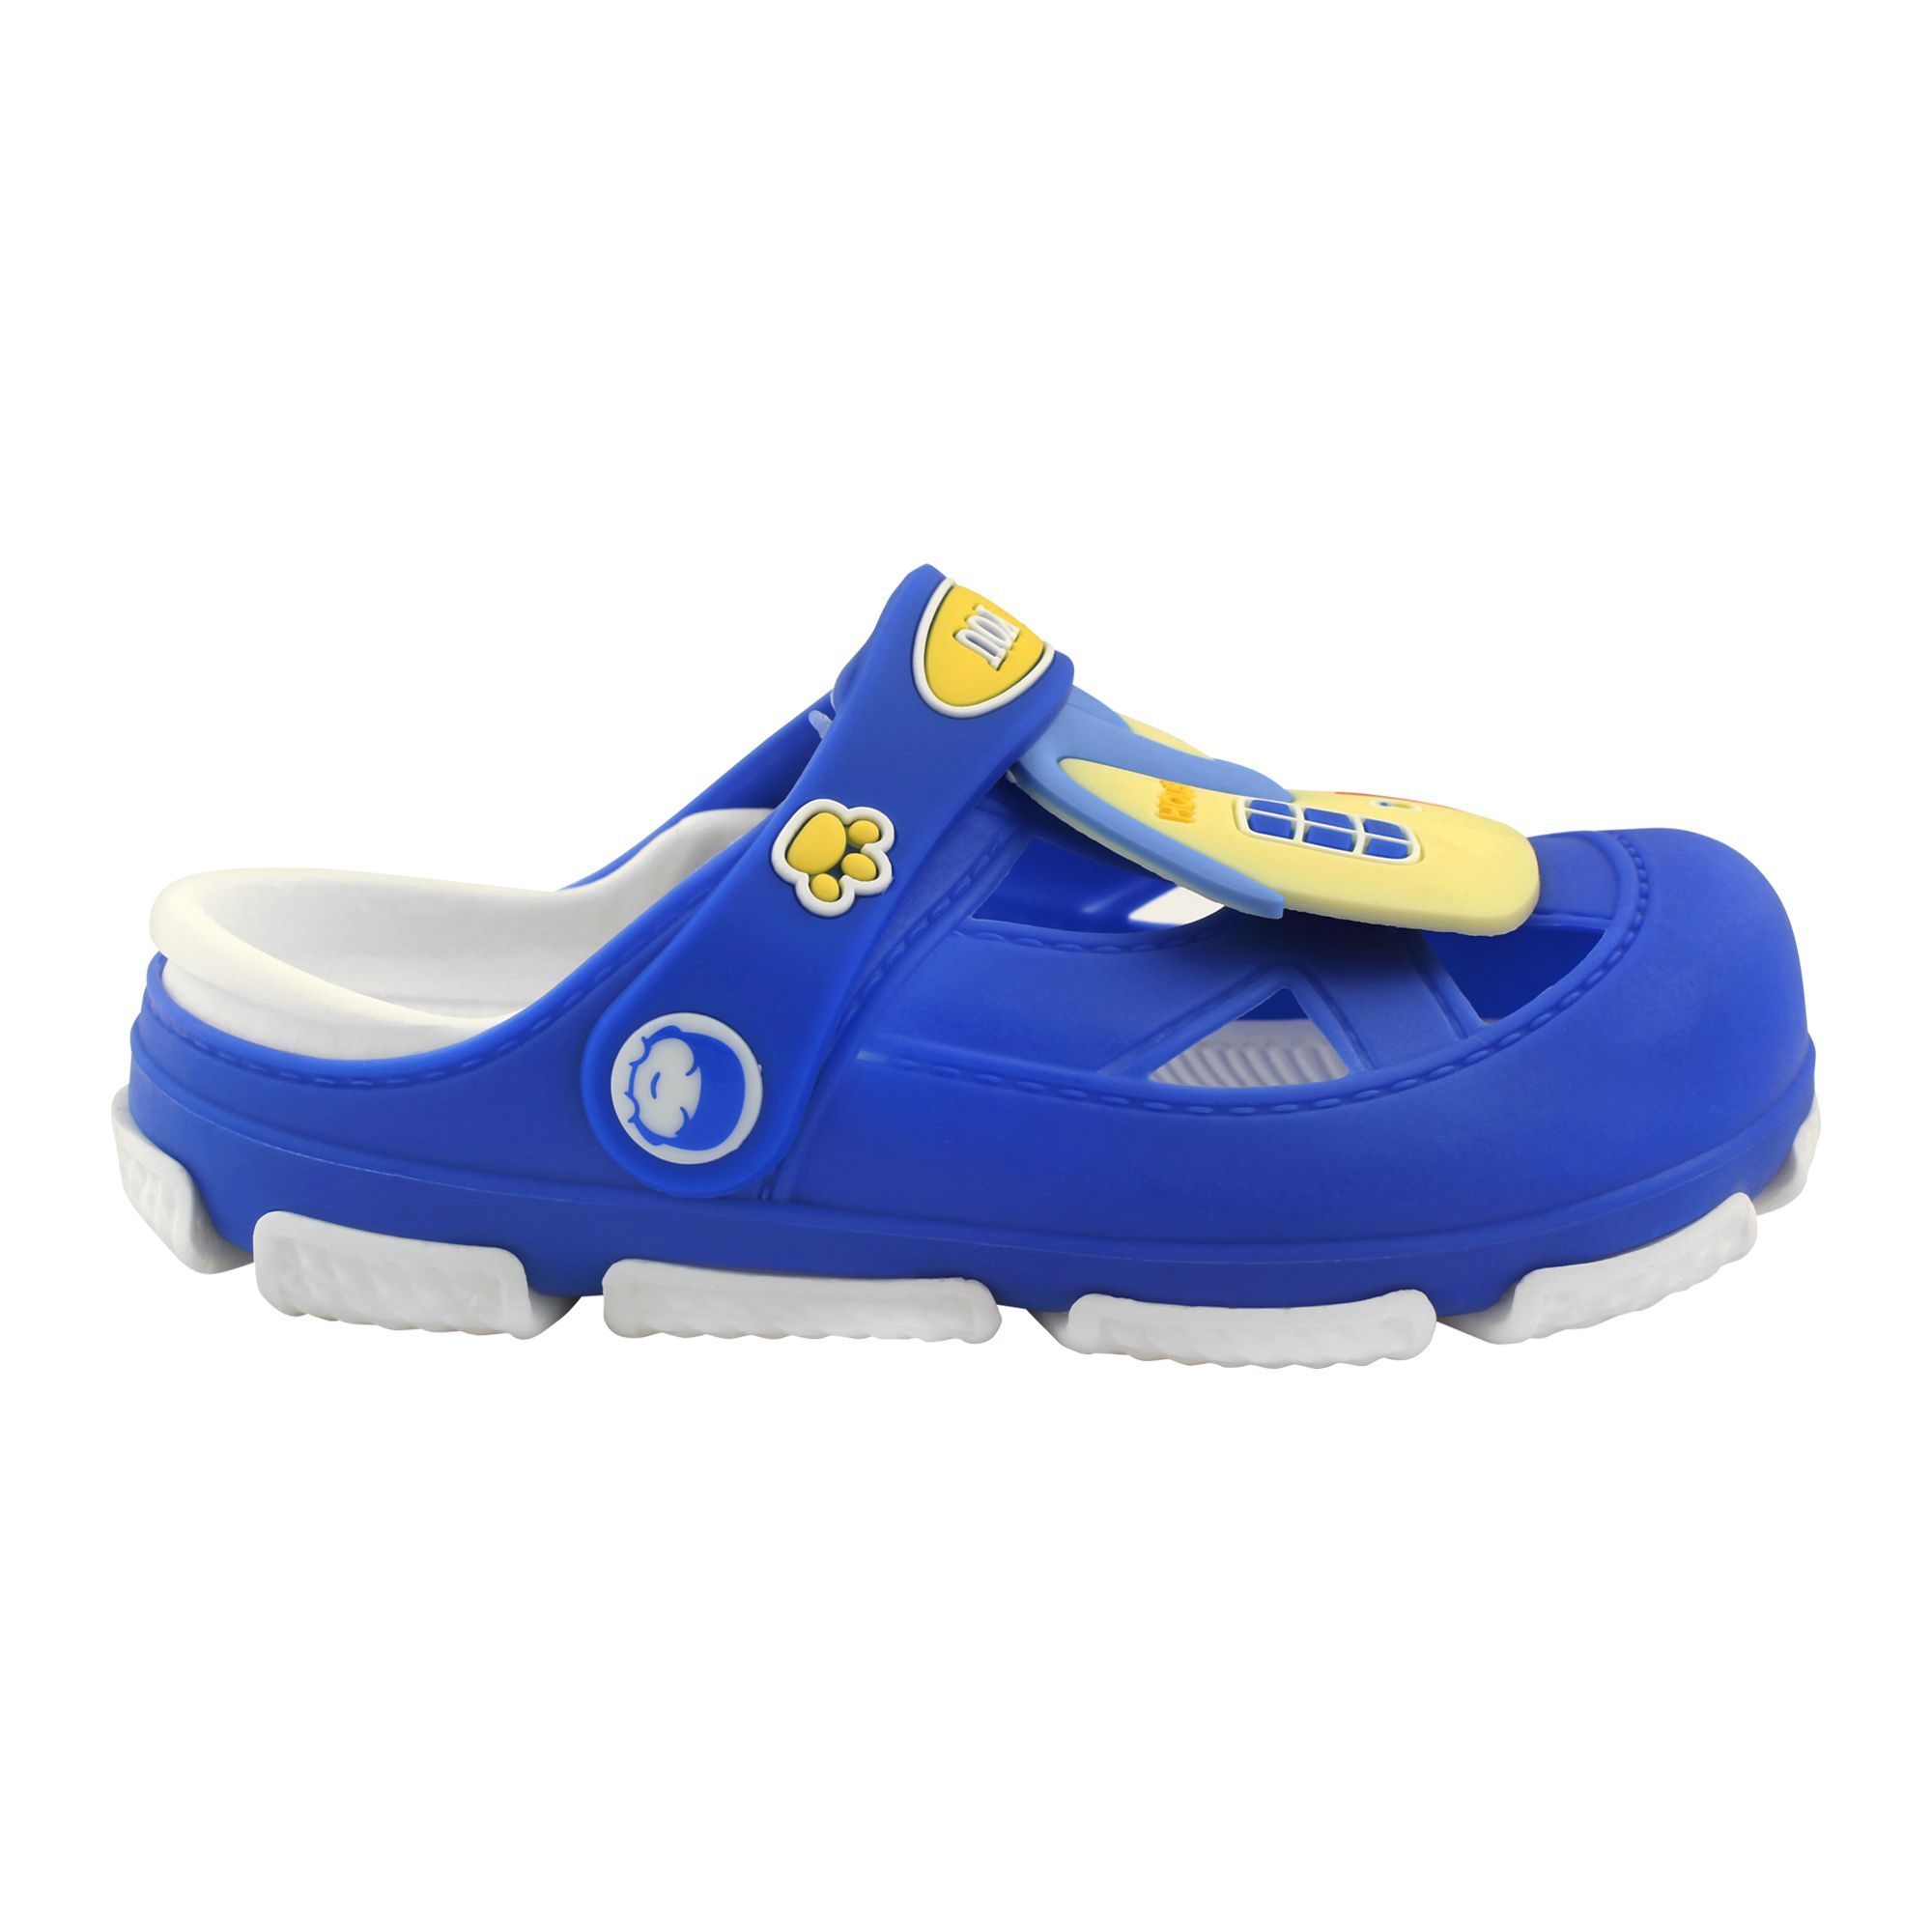 Buy Baby Crocs Kids Sandals, F-3, Blue 